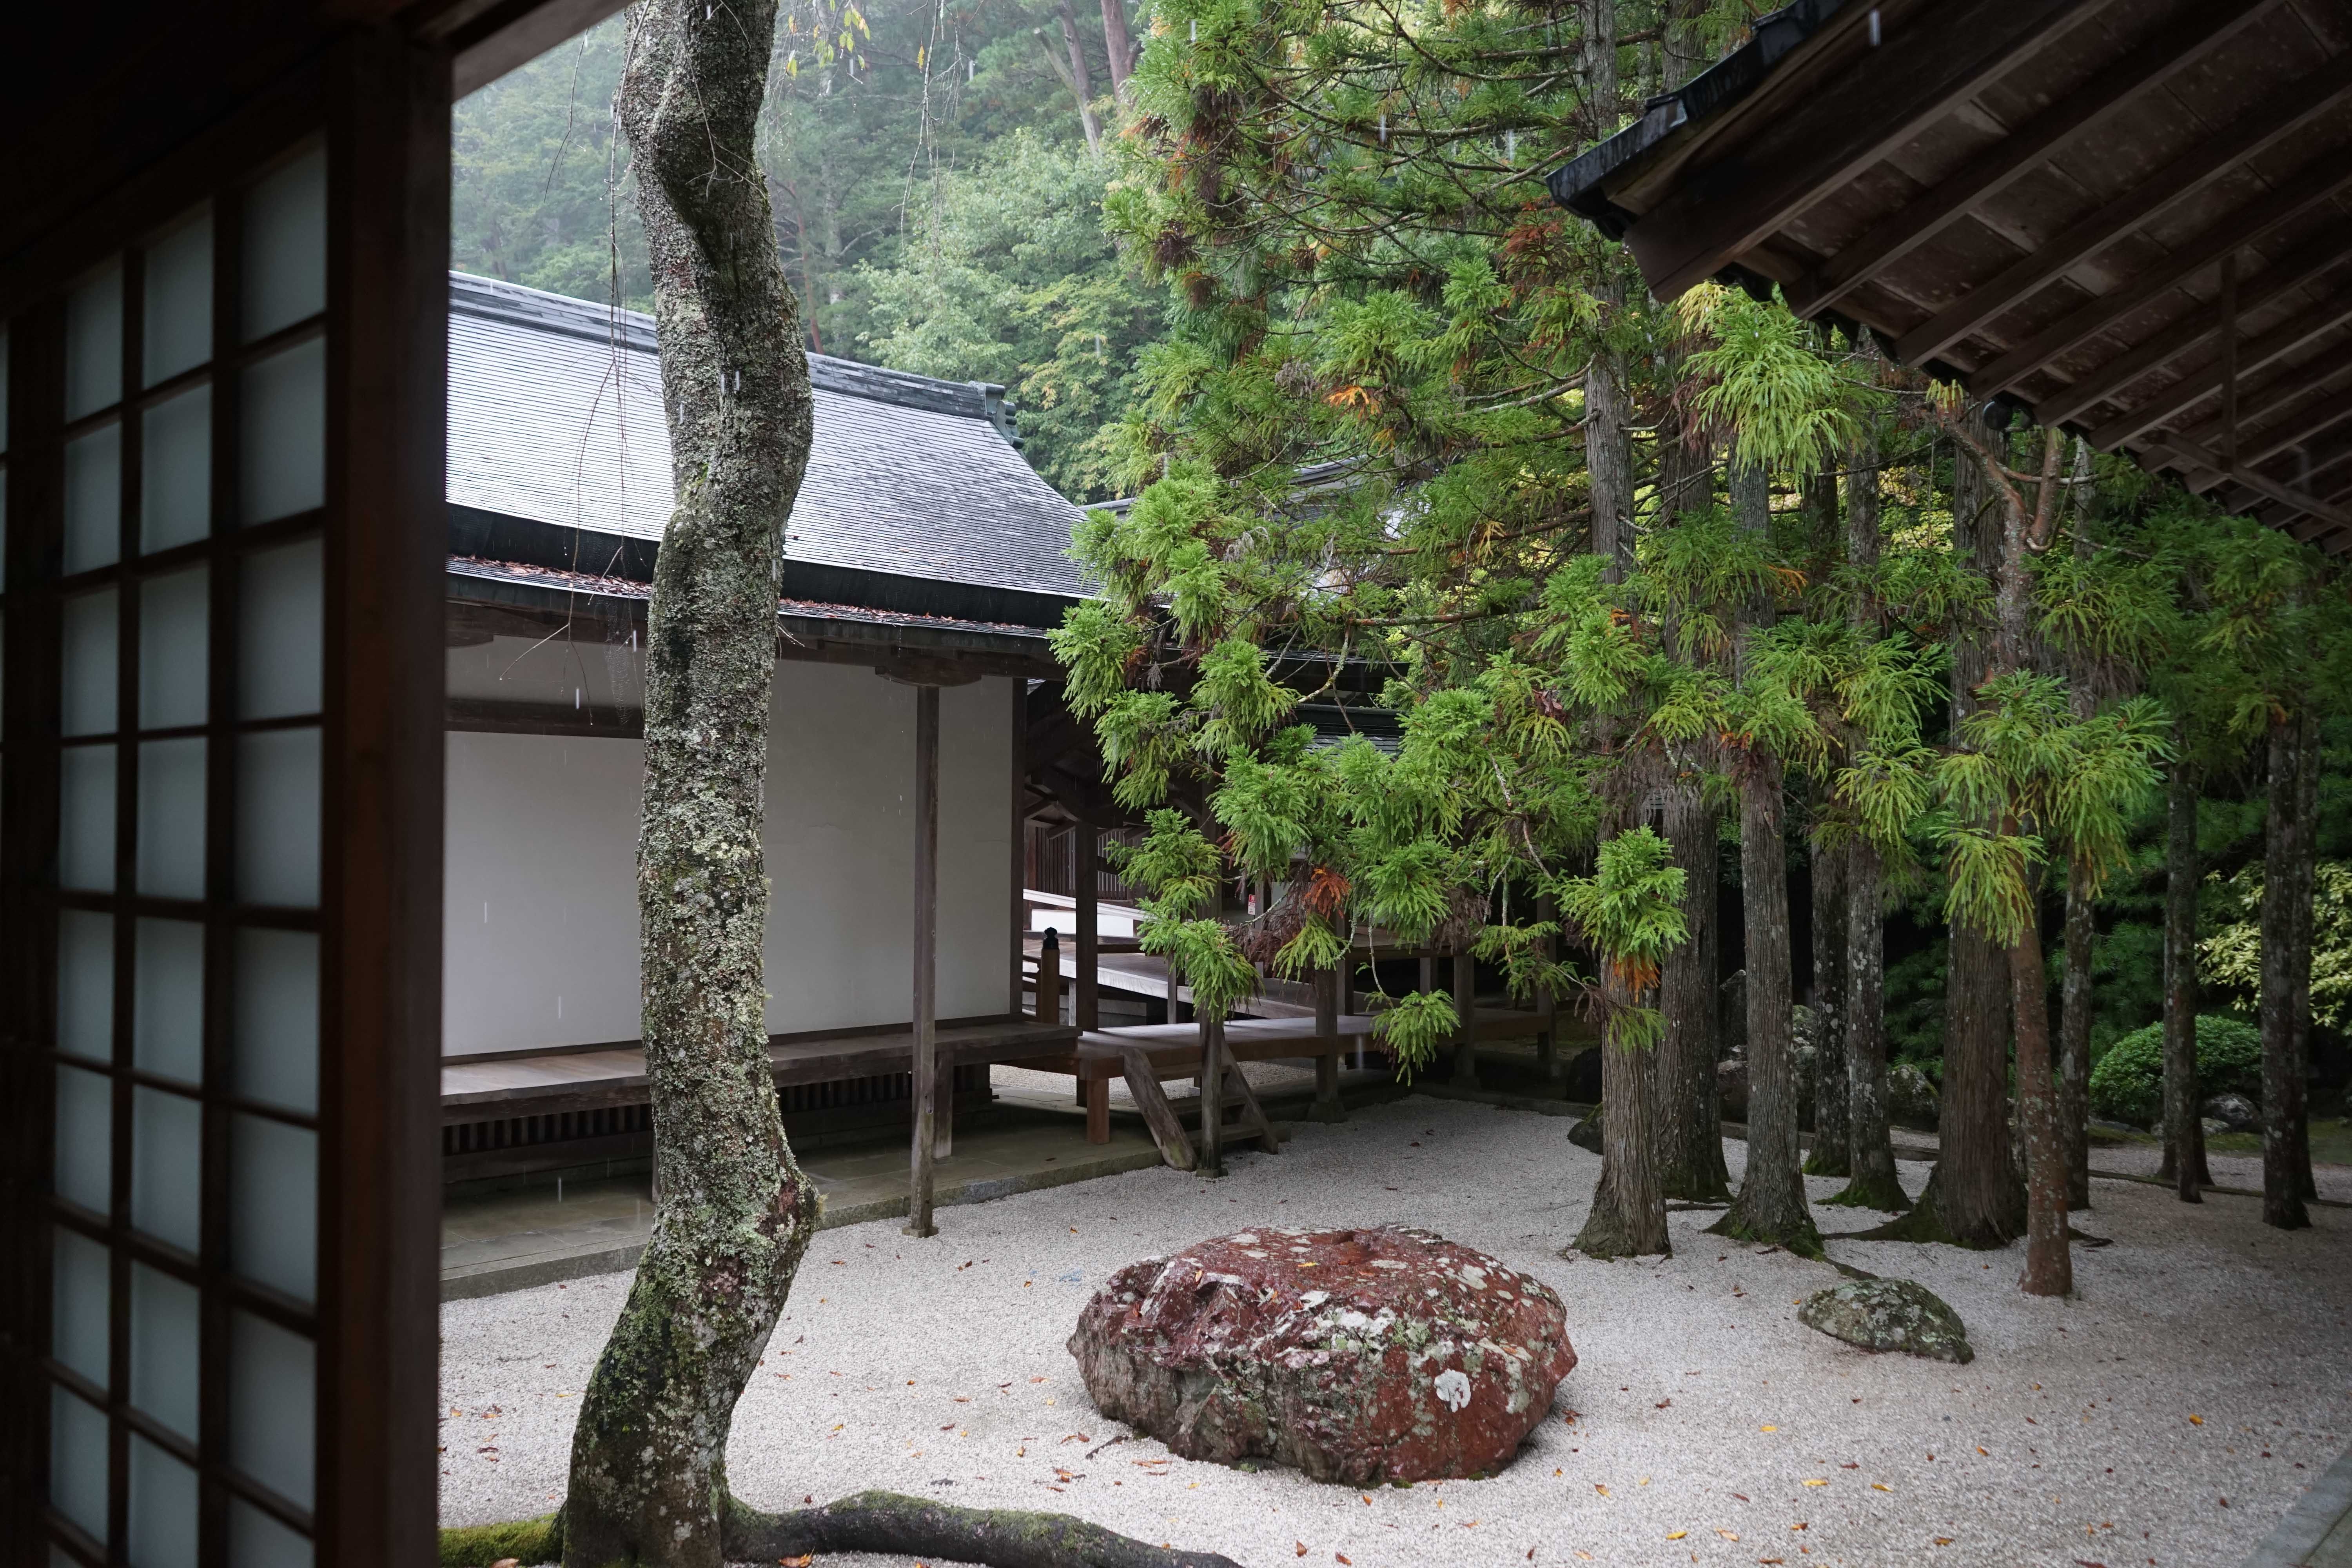 What is Zen Style in Interior Design?